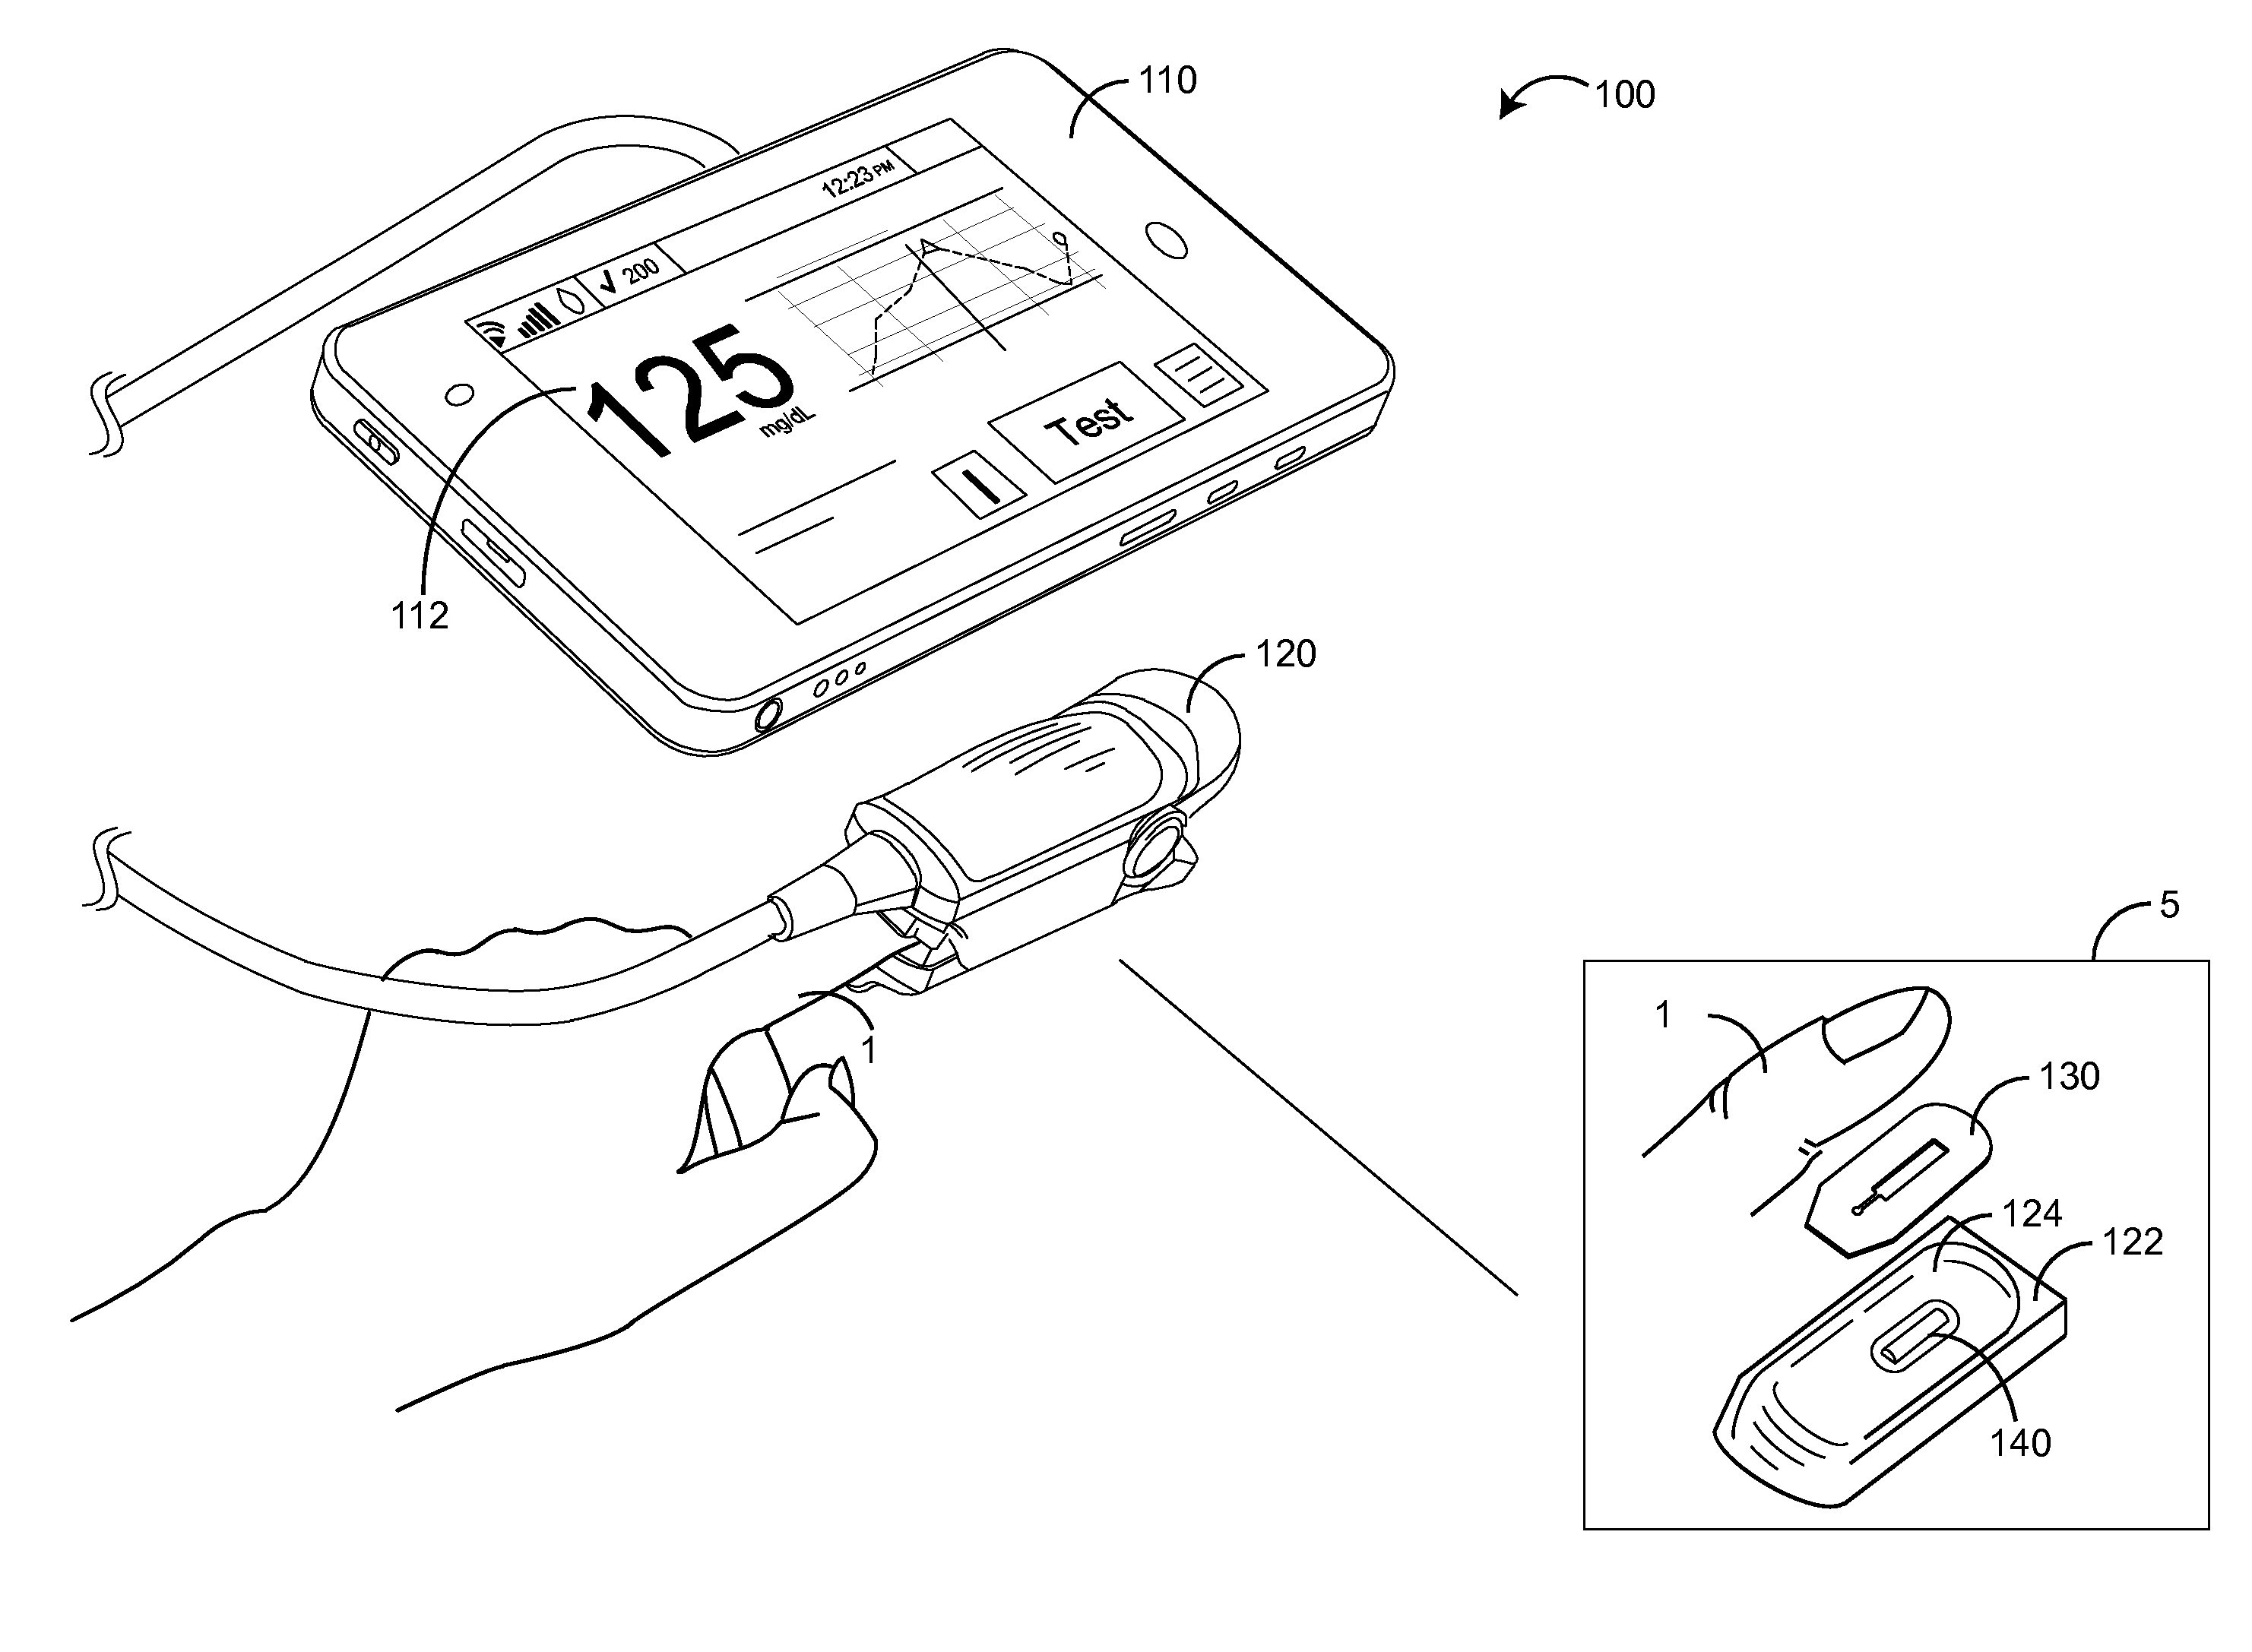 Finger-placement sensor tape